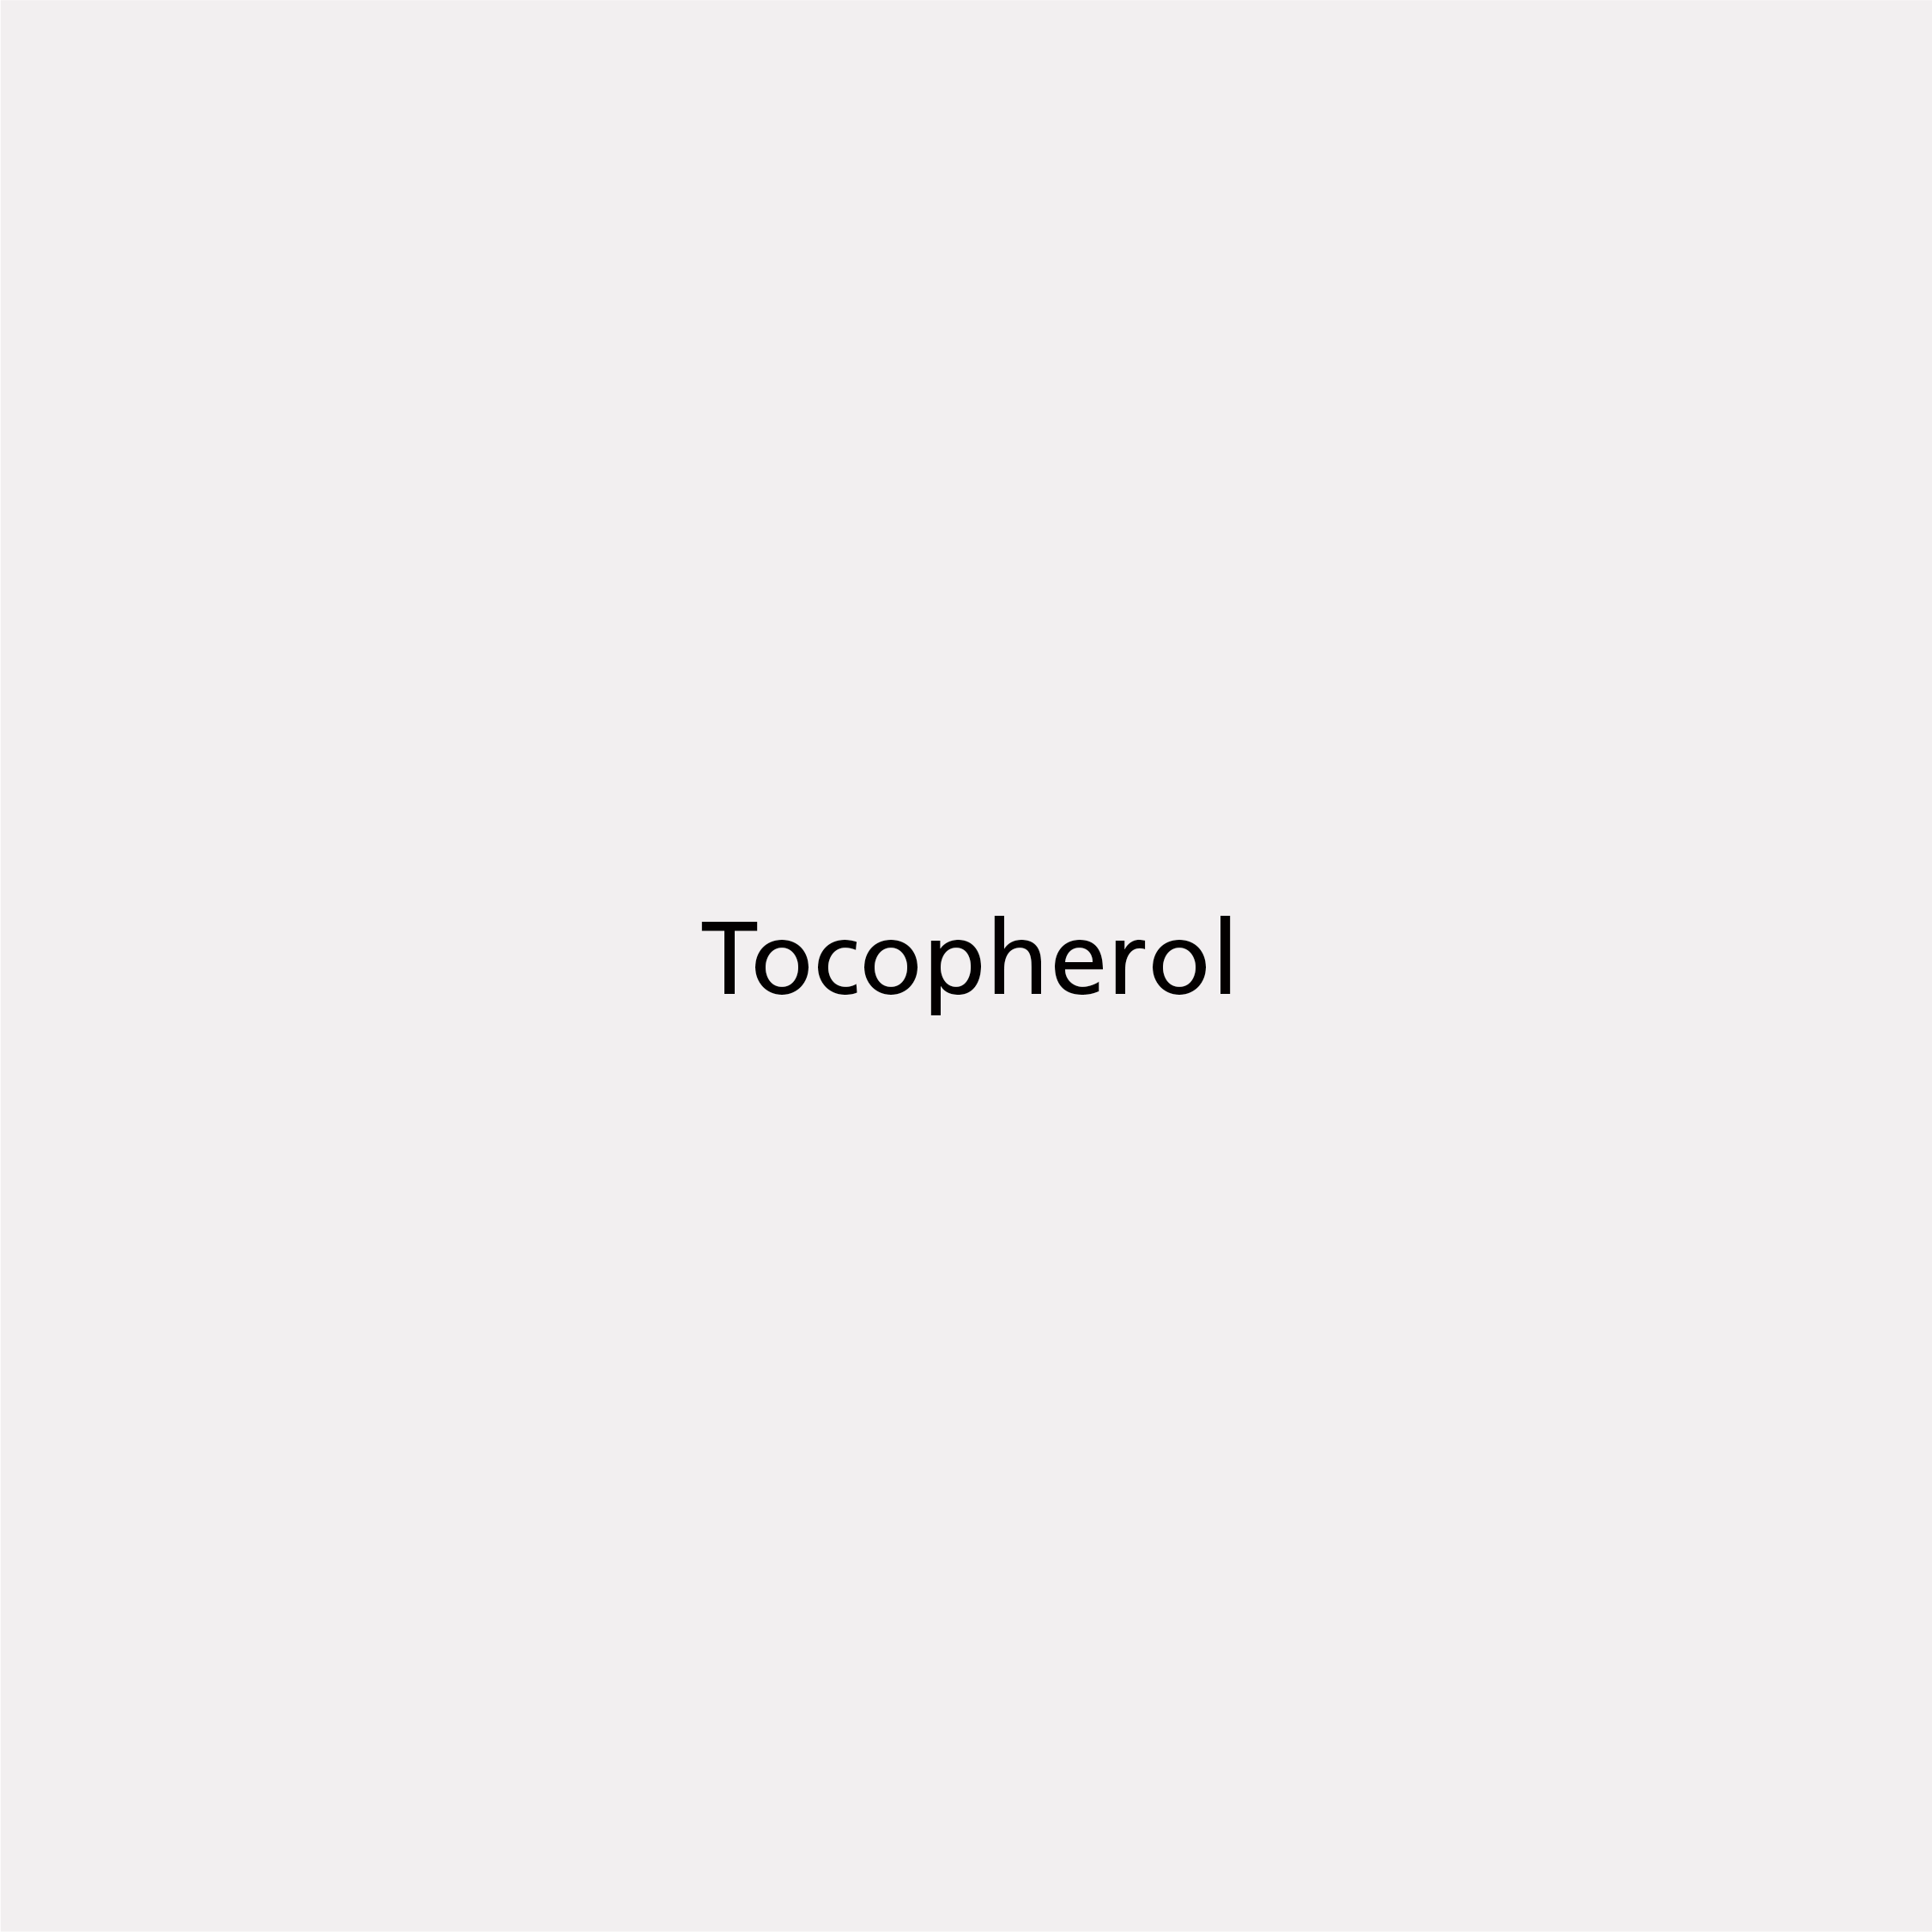 Tocopherol